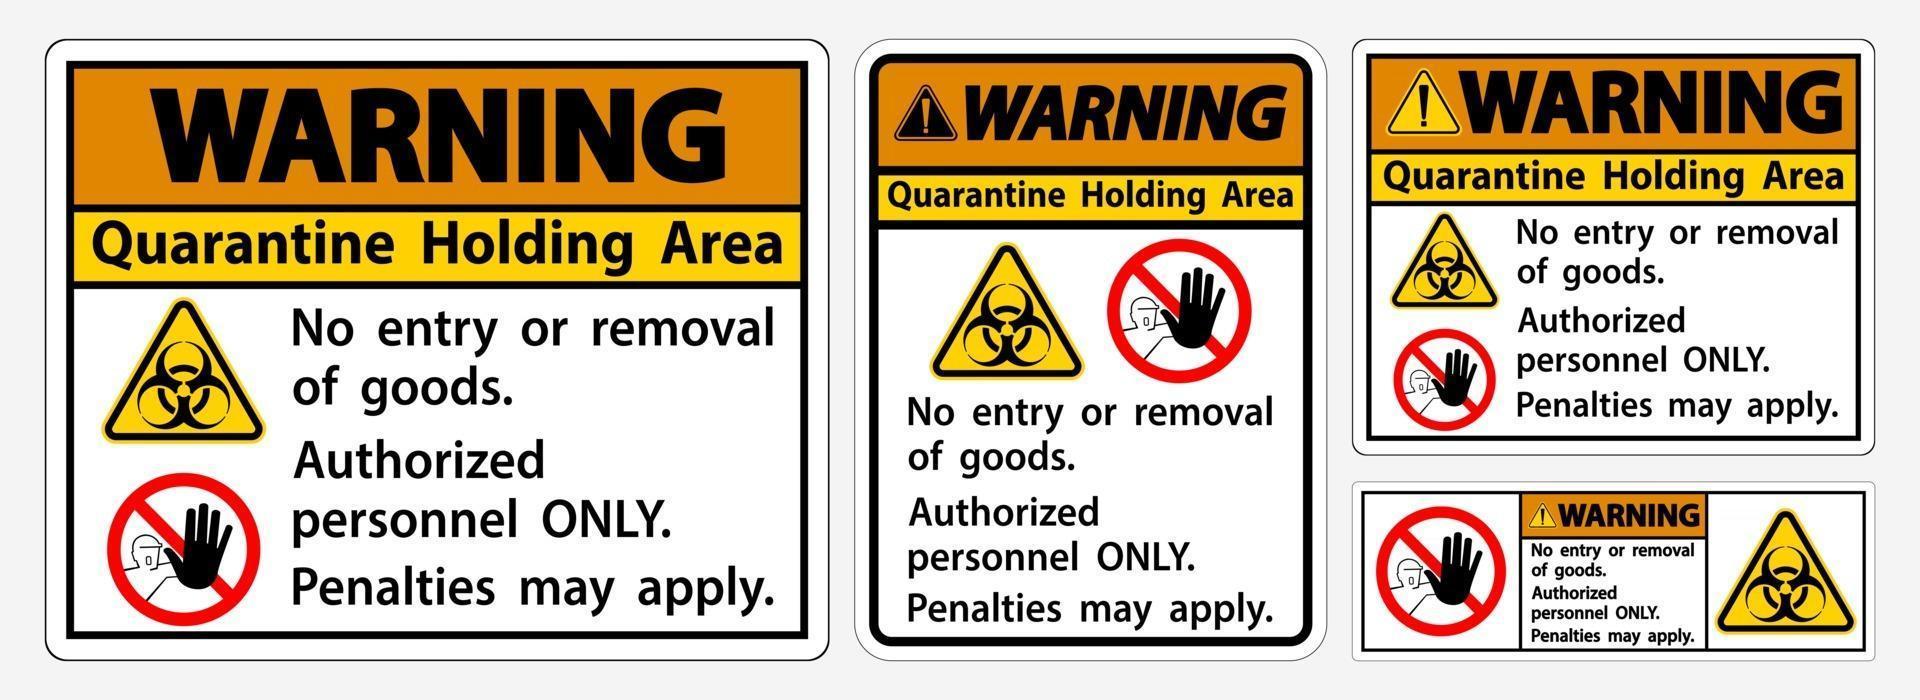 Warning Quarantine Holding Area Sign vector